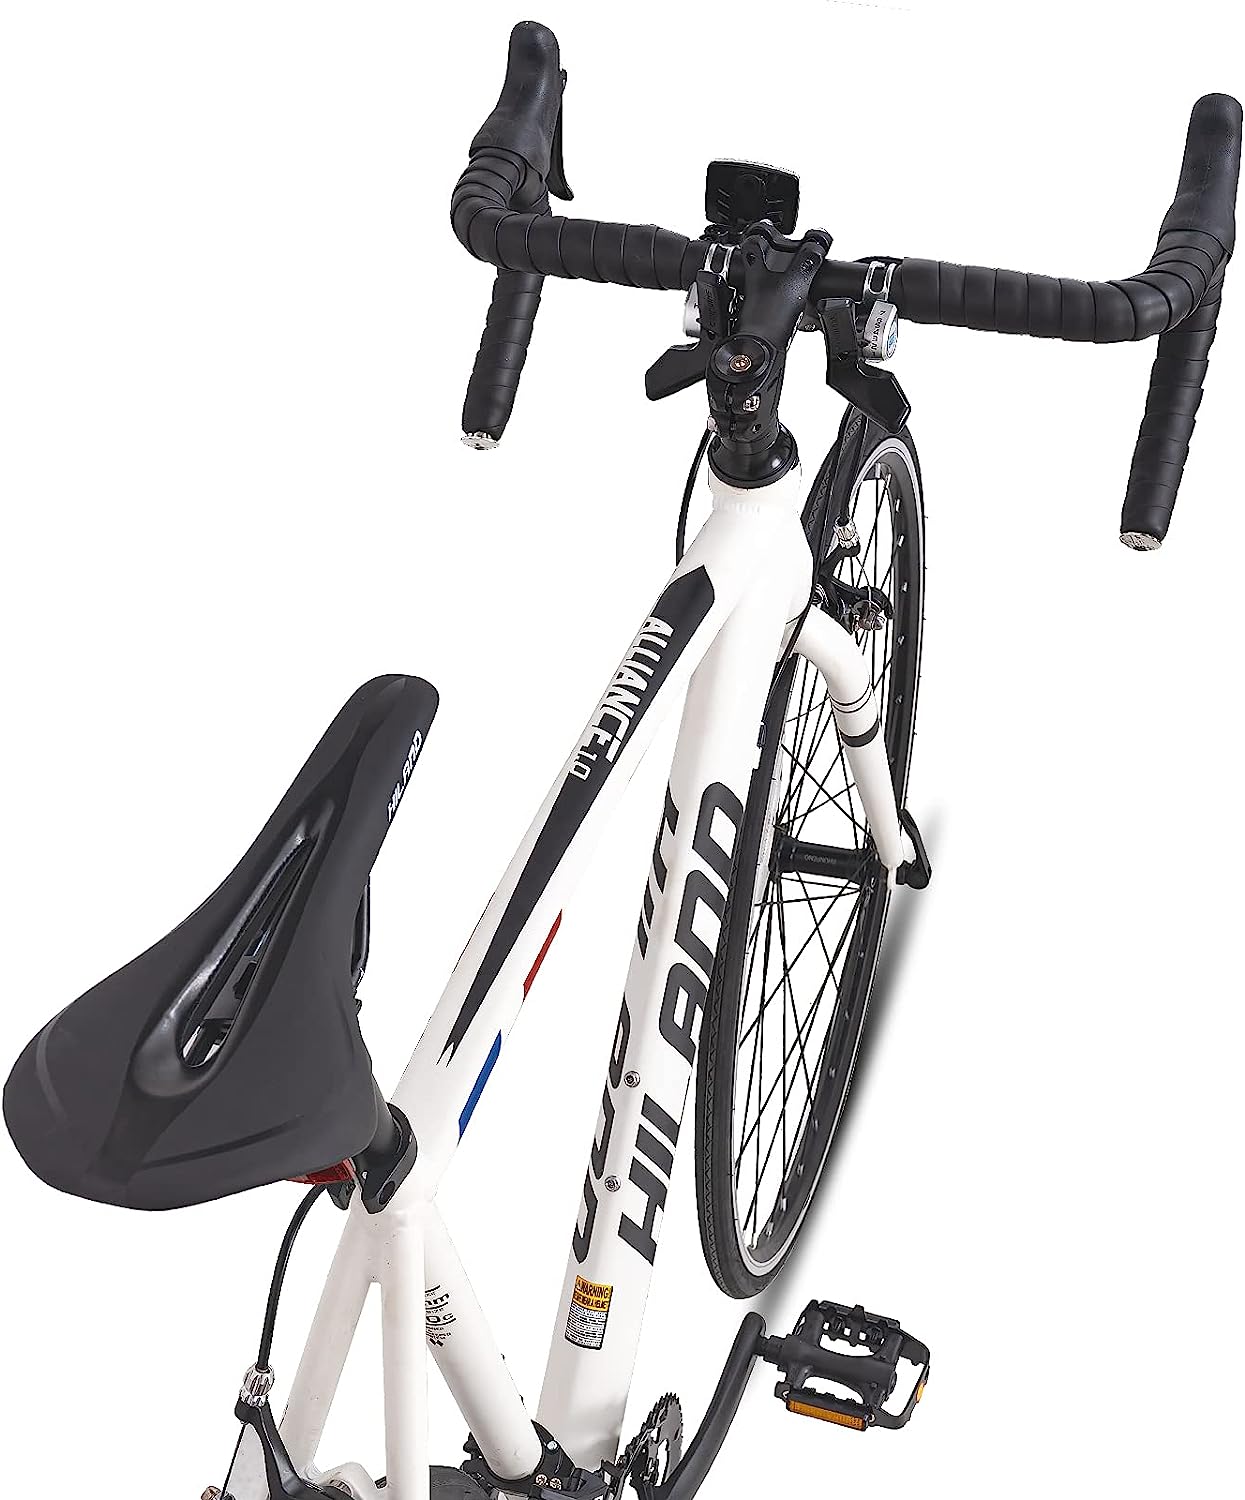 Hiland Road Bike,Shimano 14 Speeds,Light Weight Aluminum Frame,700C Racing Bike for Men - image 3 of 8